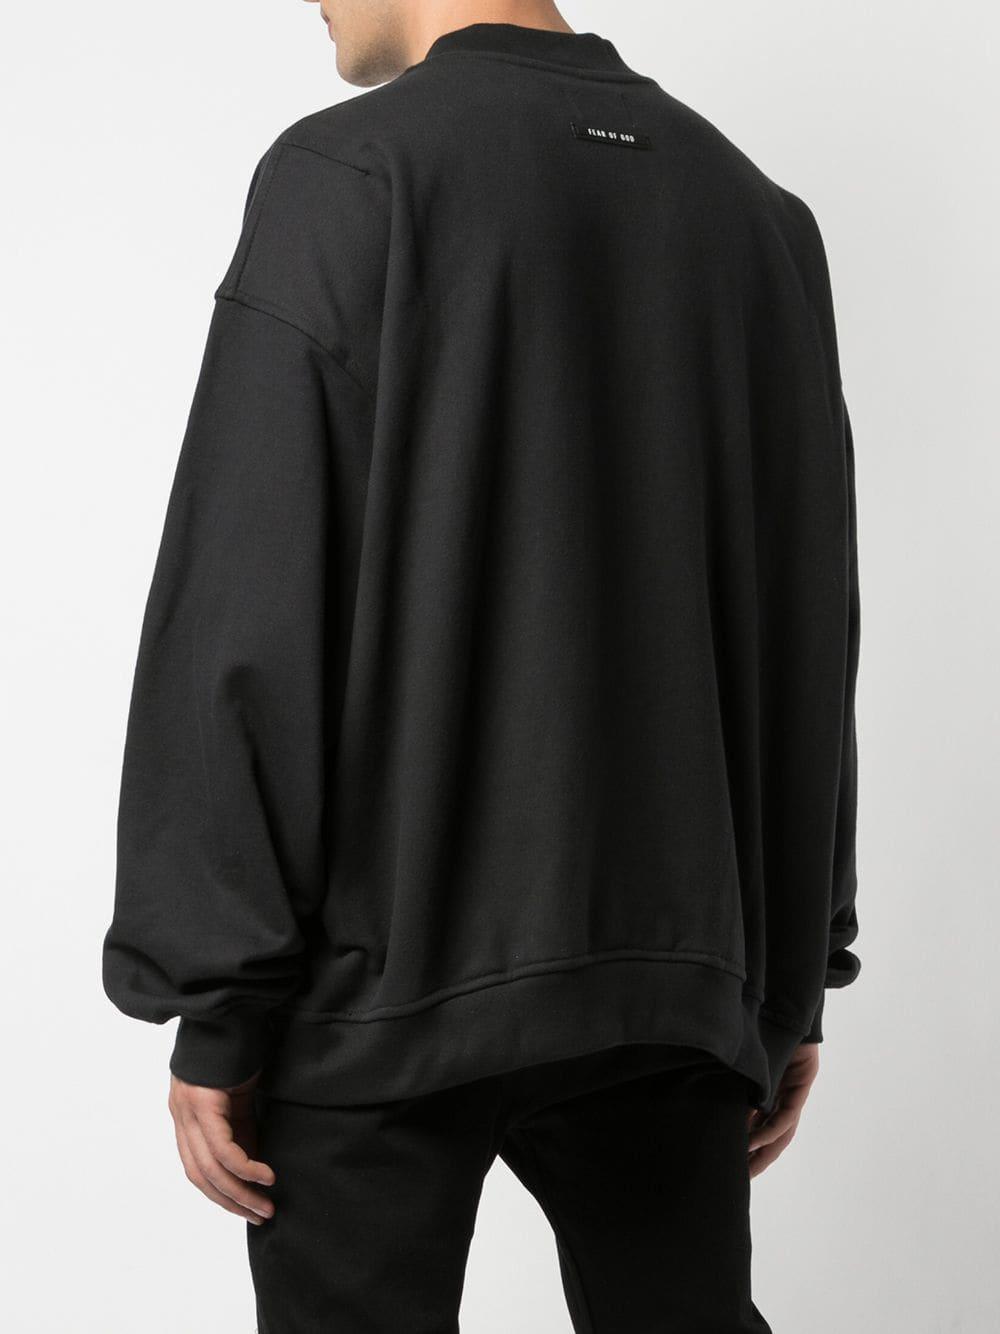 Fear Of God Cotton Oversized Sweater in Black for Men - Lyst